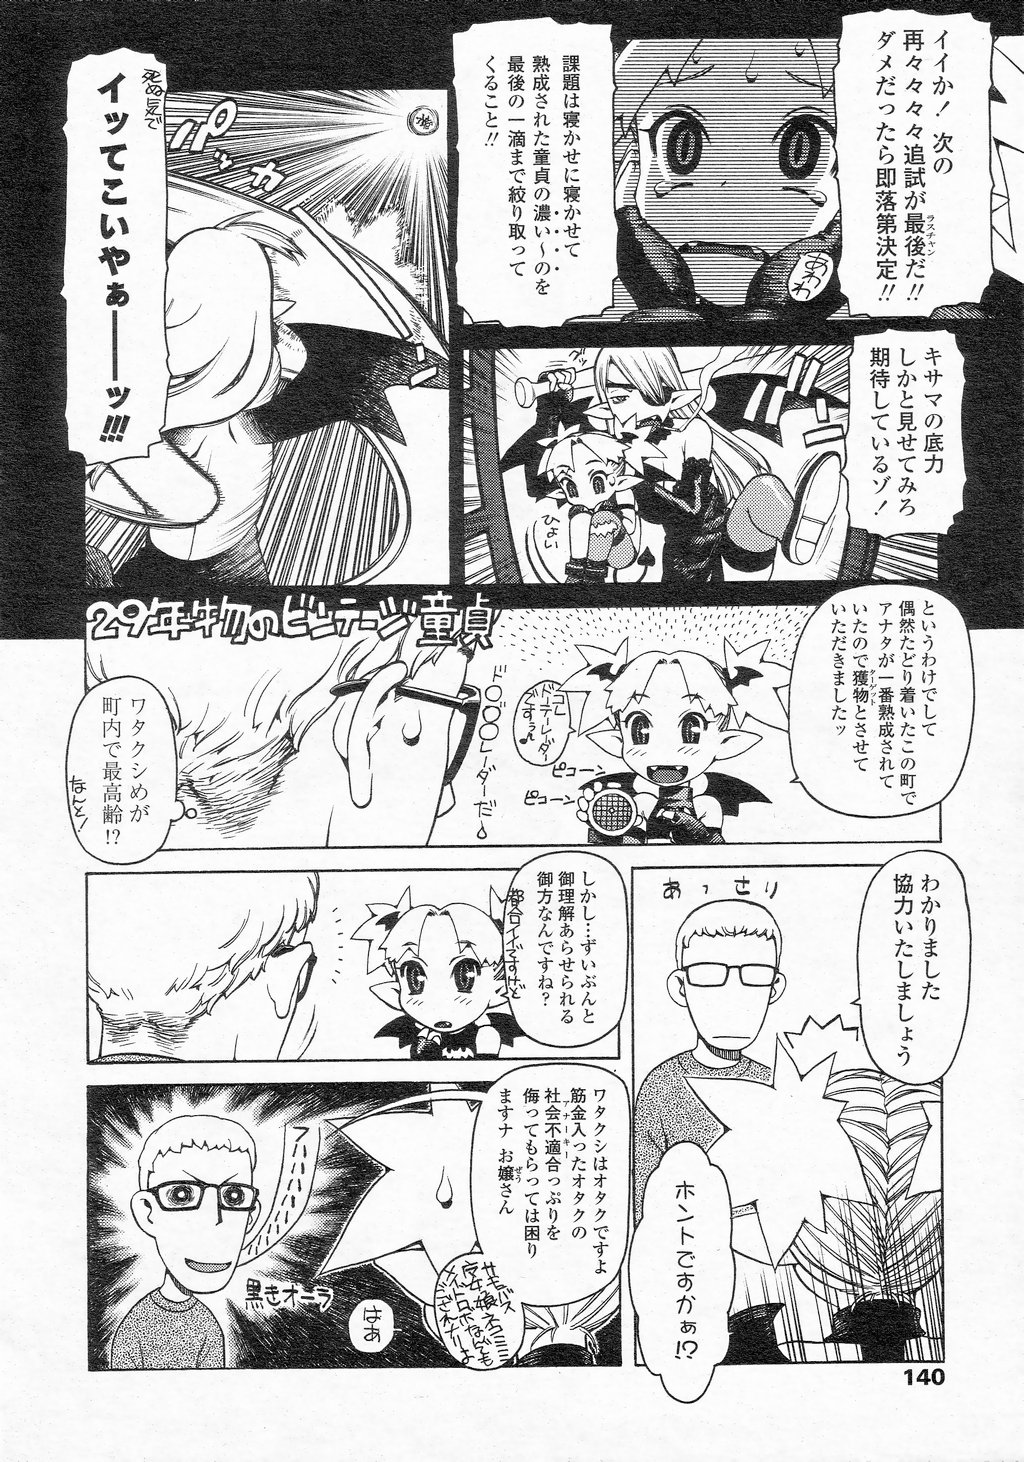 [雑誌] COMIC LO 2002年10月号(Vol.1)